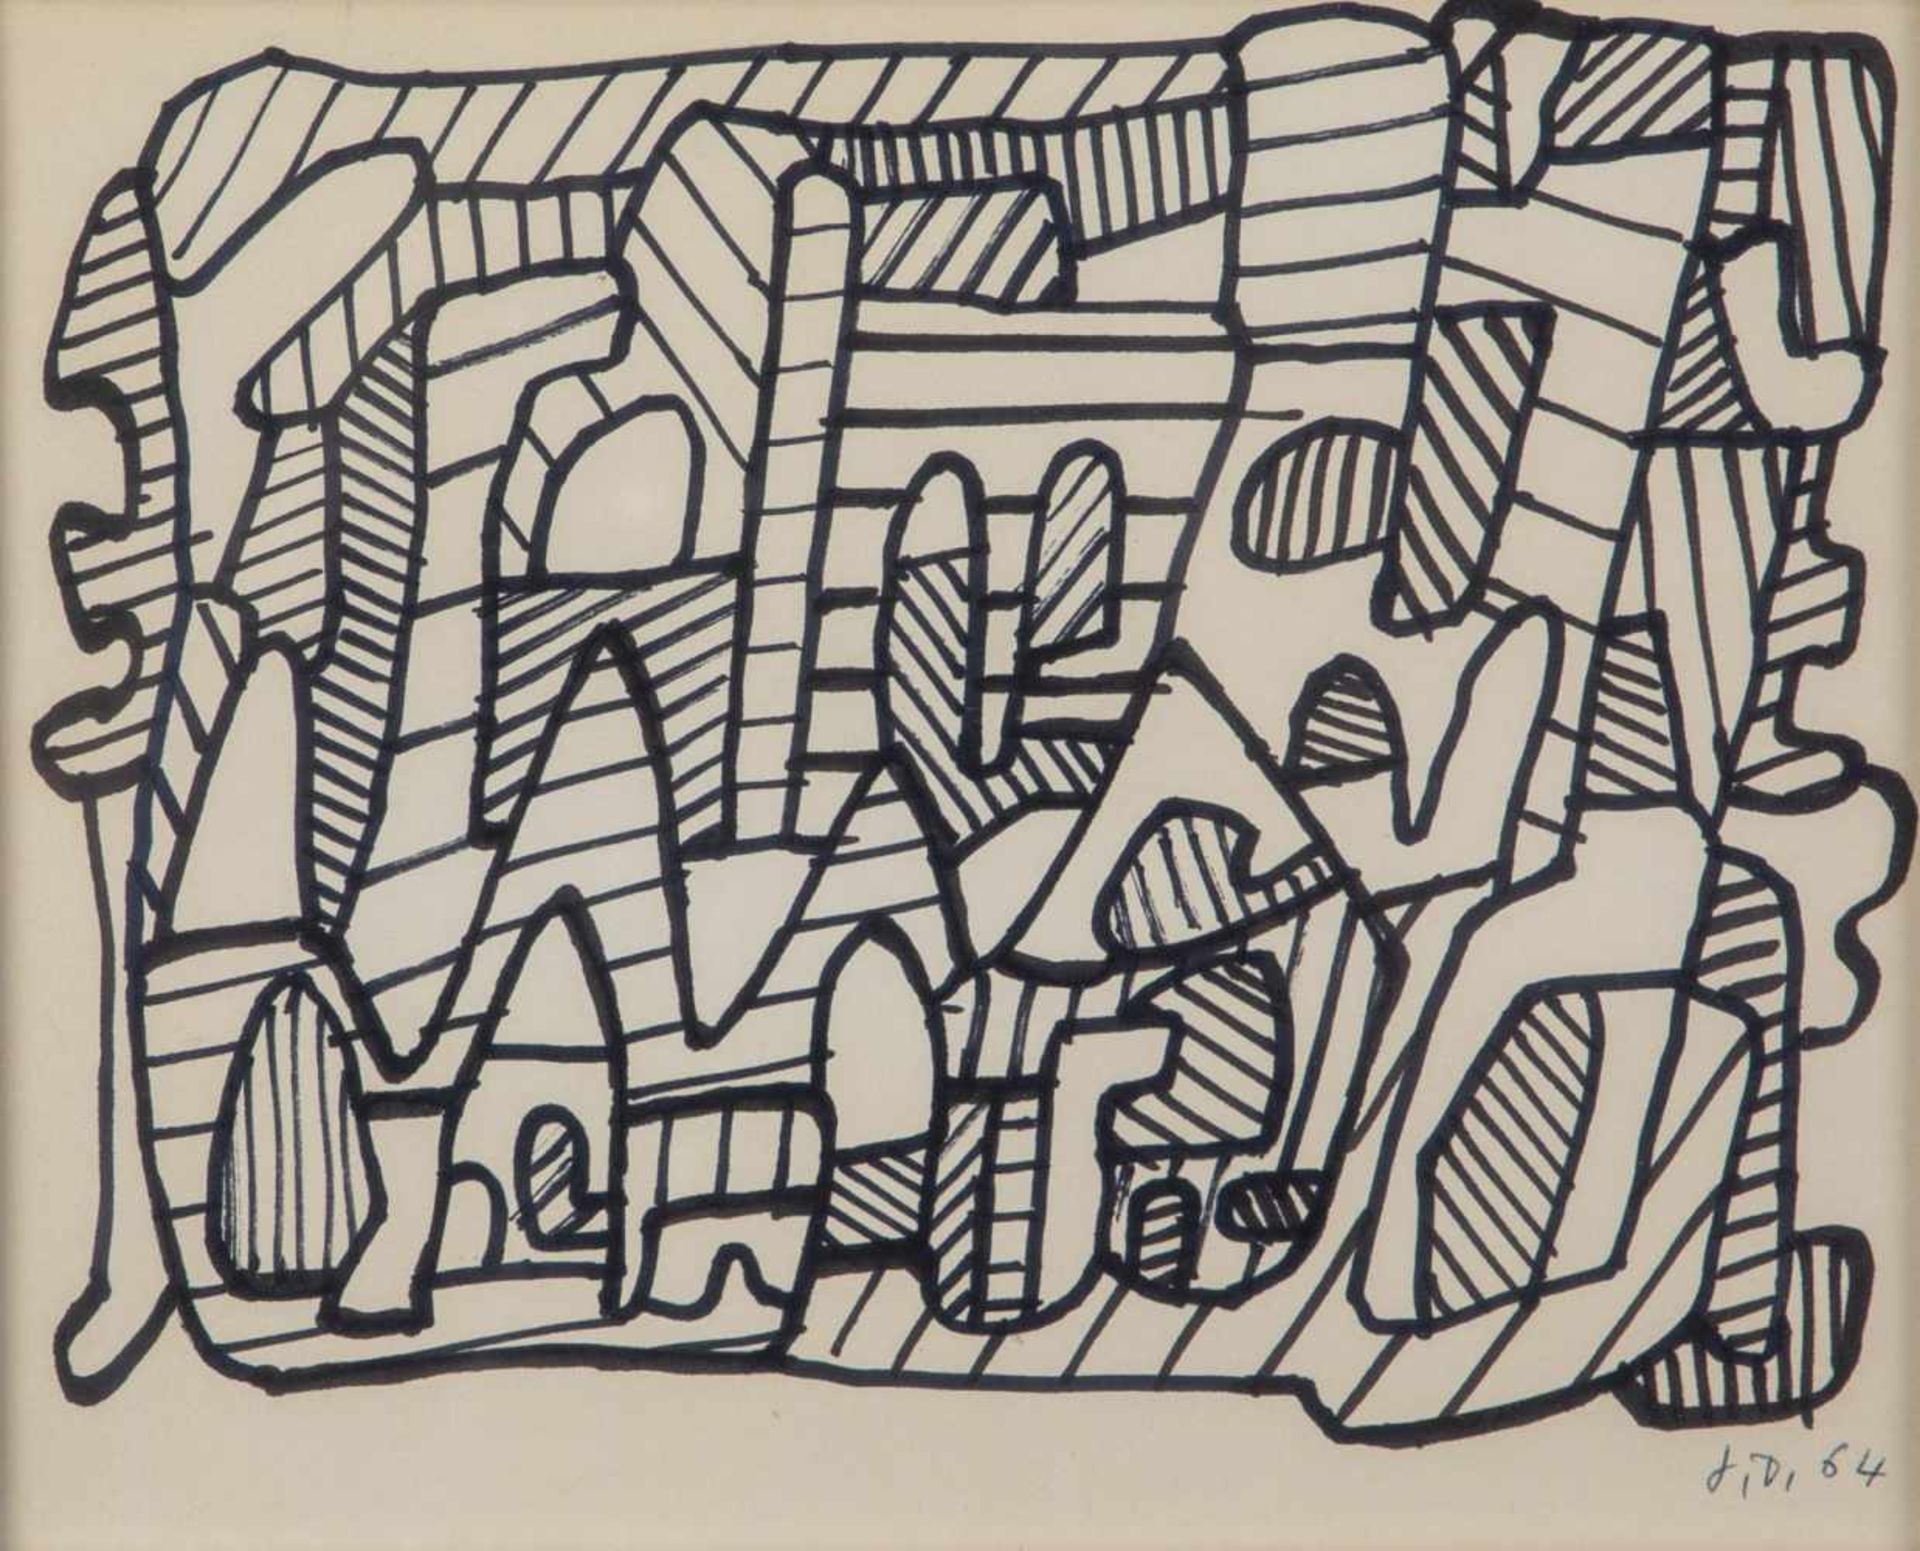 Jean Dubuffet. 1901 Le Havre - 1985 Paris. Cathedral. Felt-tip pen on paper. Monogrammedlower